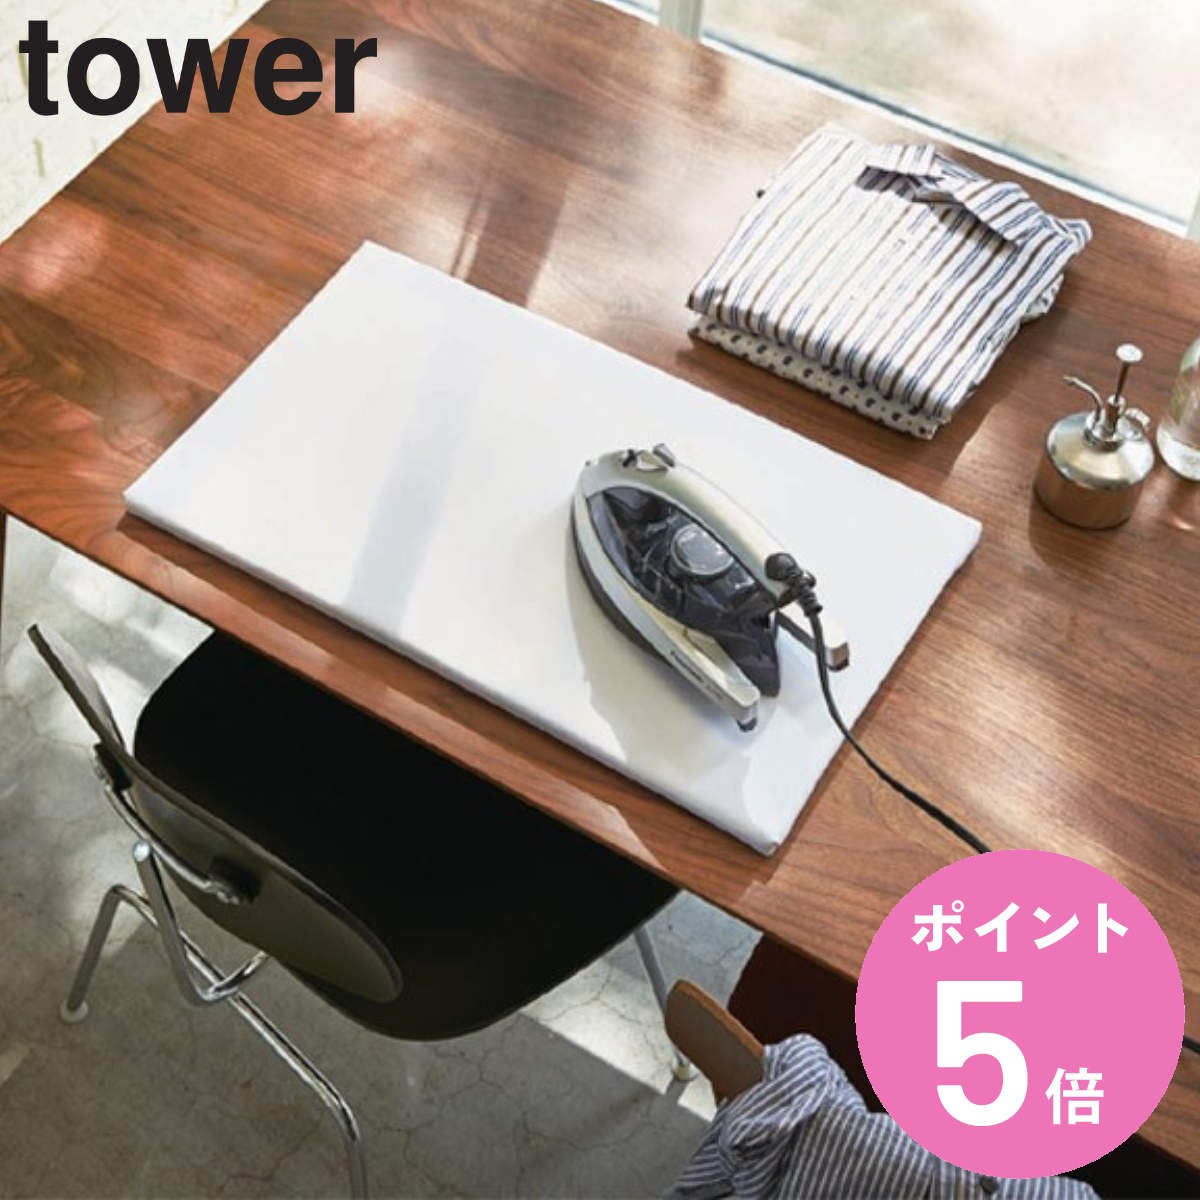 R tower ^AC ^[